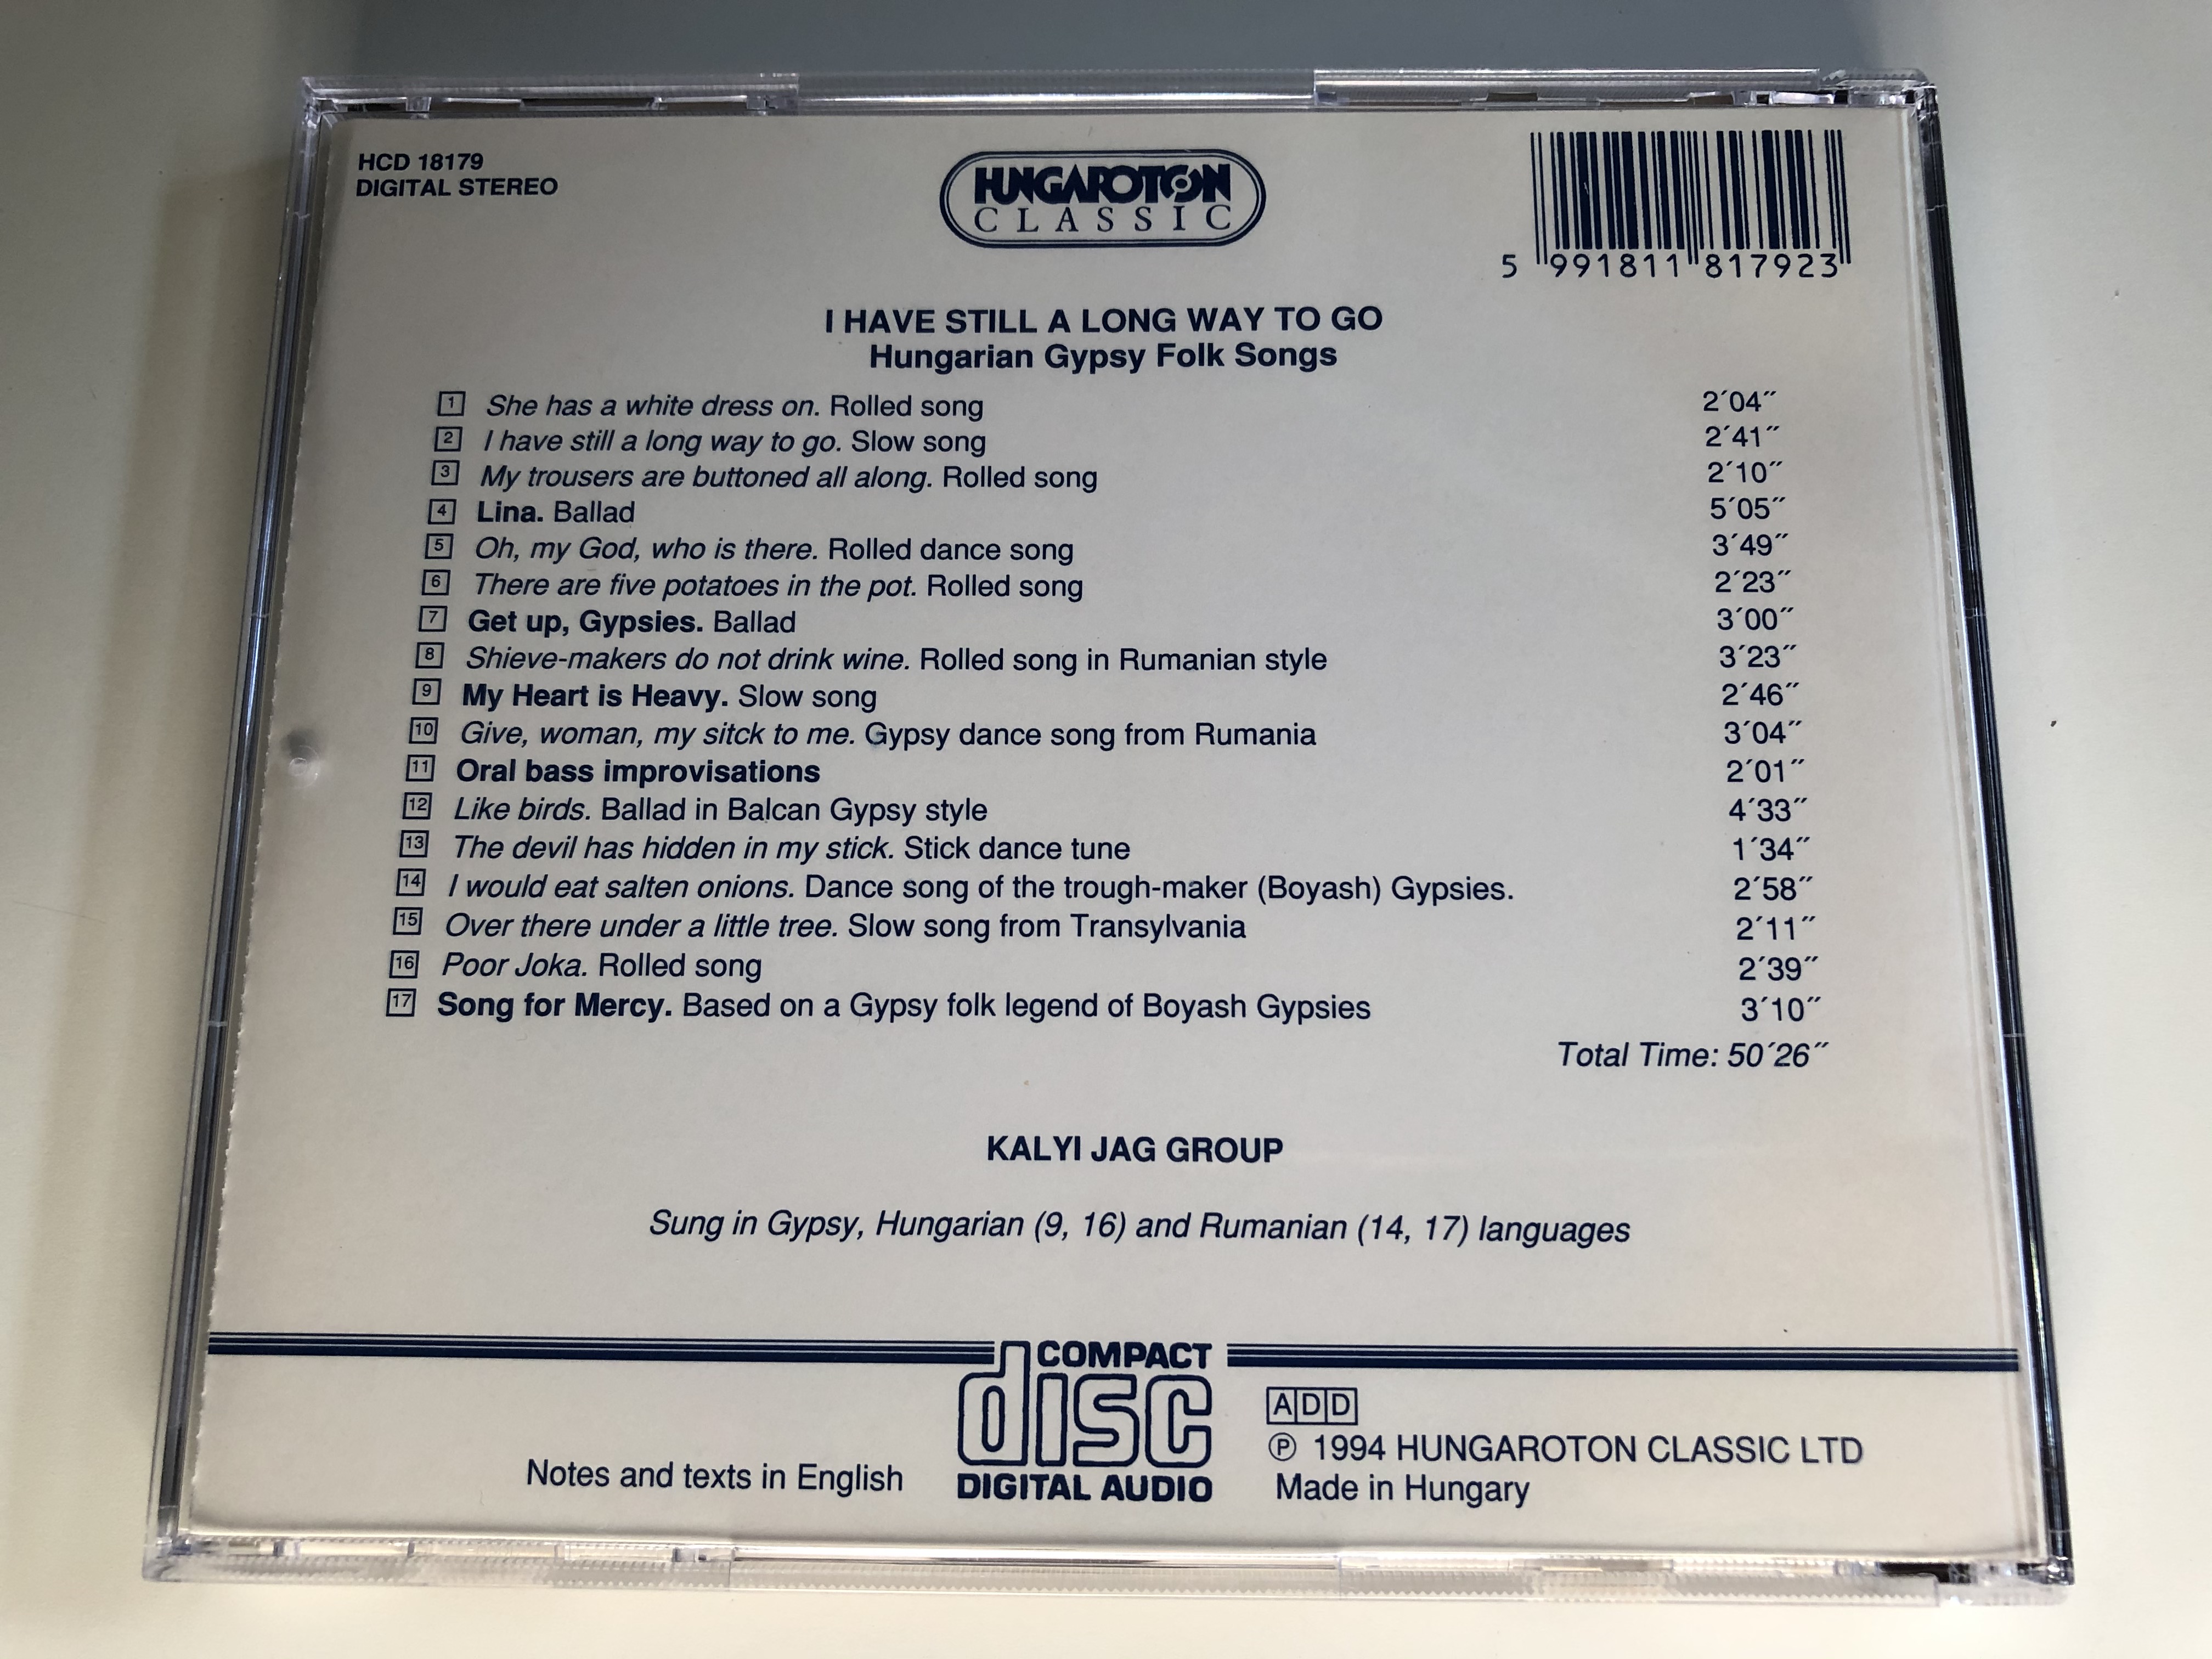 lungoj-o-drom-angla-mande-gipsy-folk-songs-from-hungary-kalyi-jag-hungaroton-classic-audio-cd-1995-stereo-hcd-18179-12-.jpg